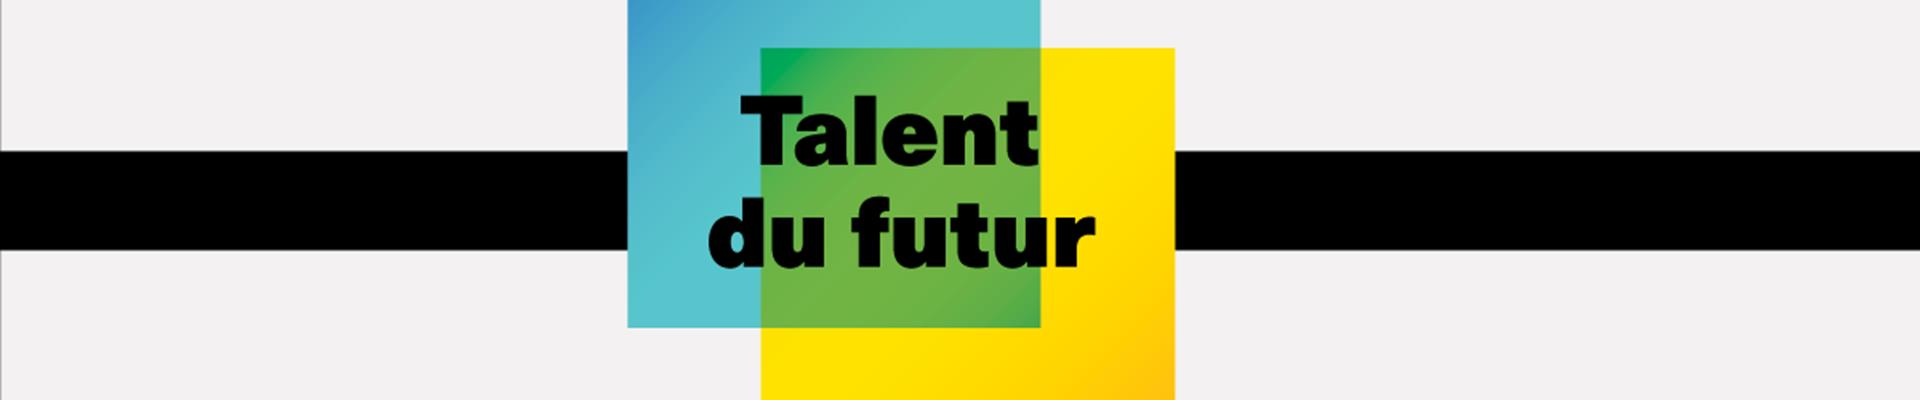 Talent du futur